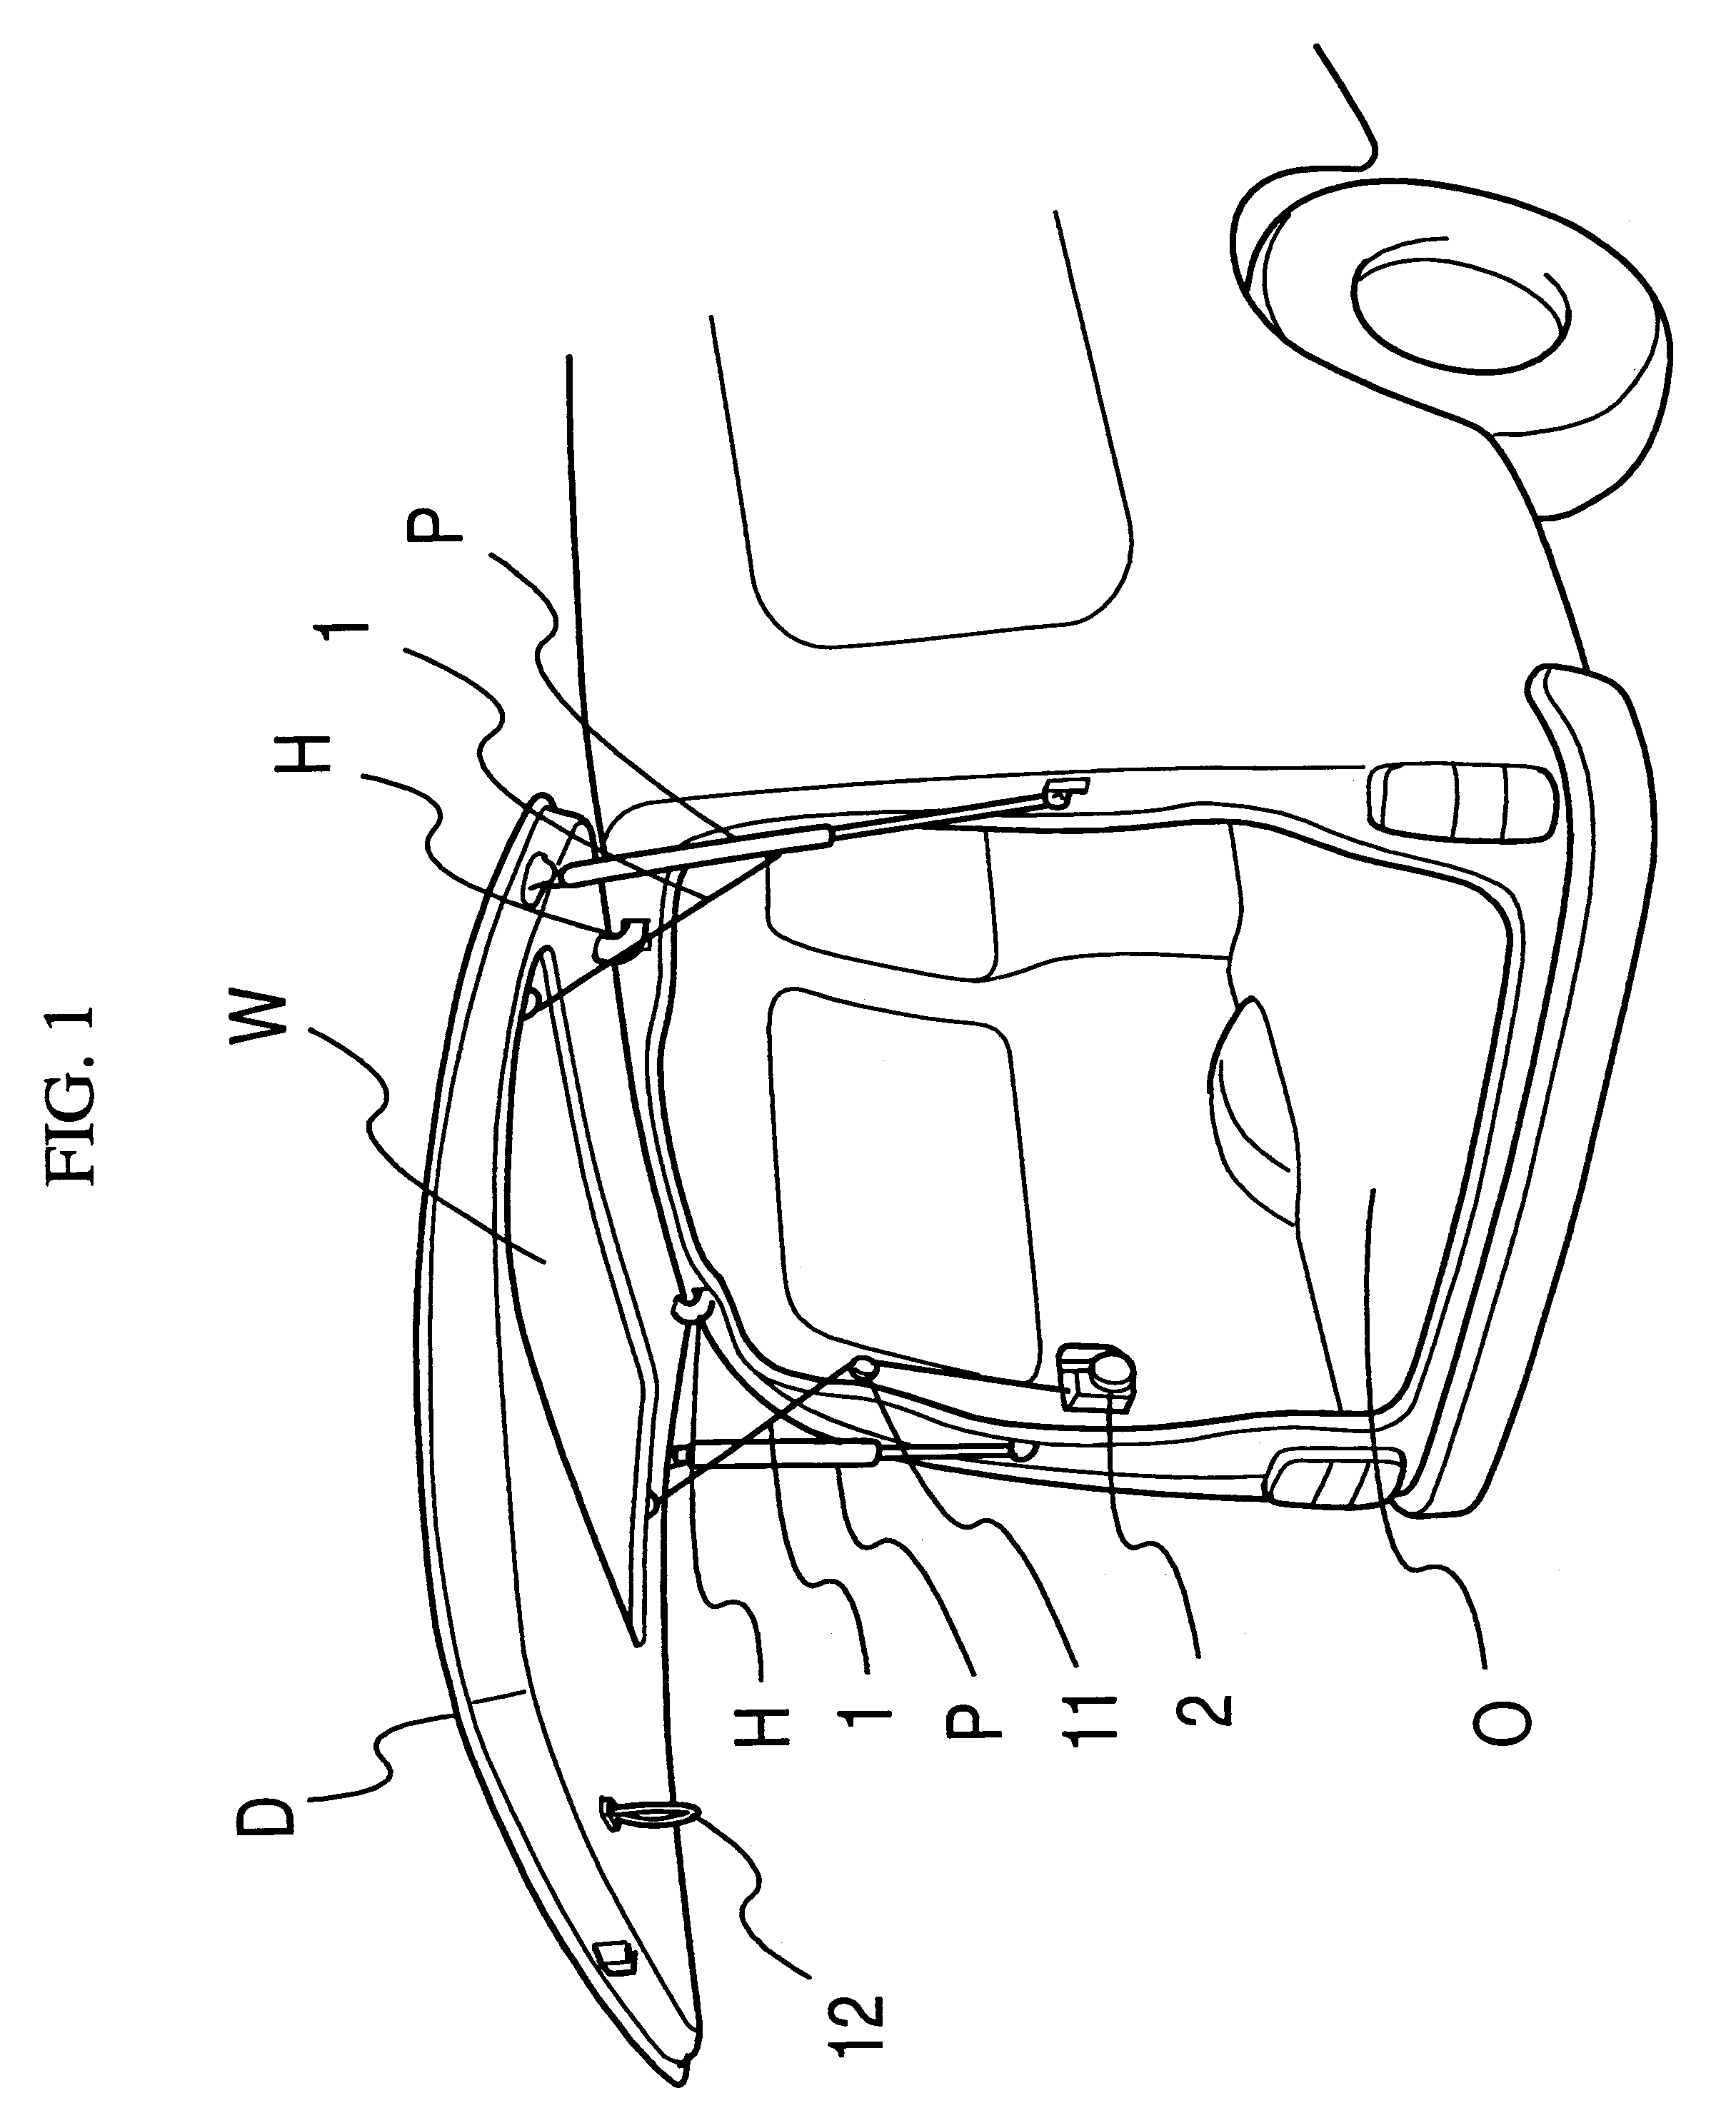 Automatic closer of pop-up door of vehicle